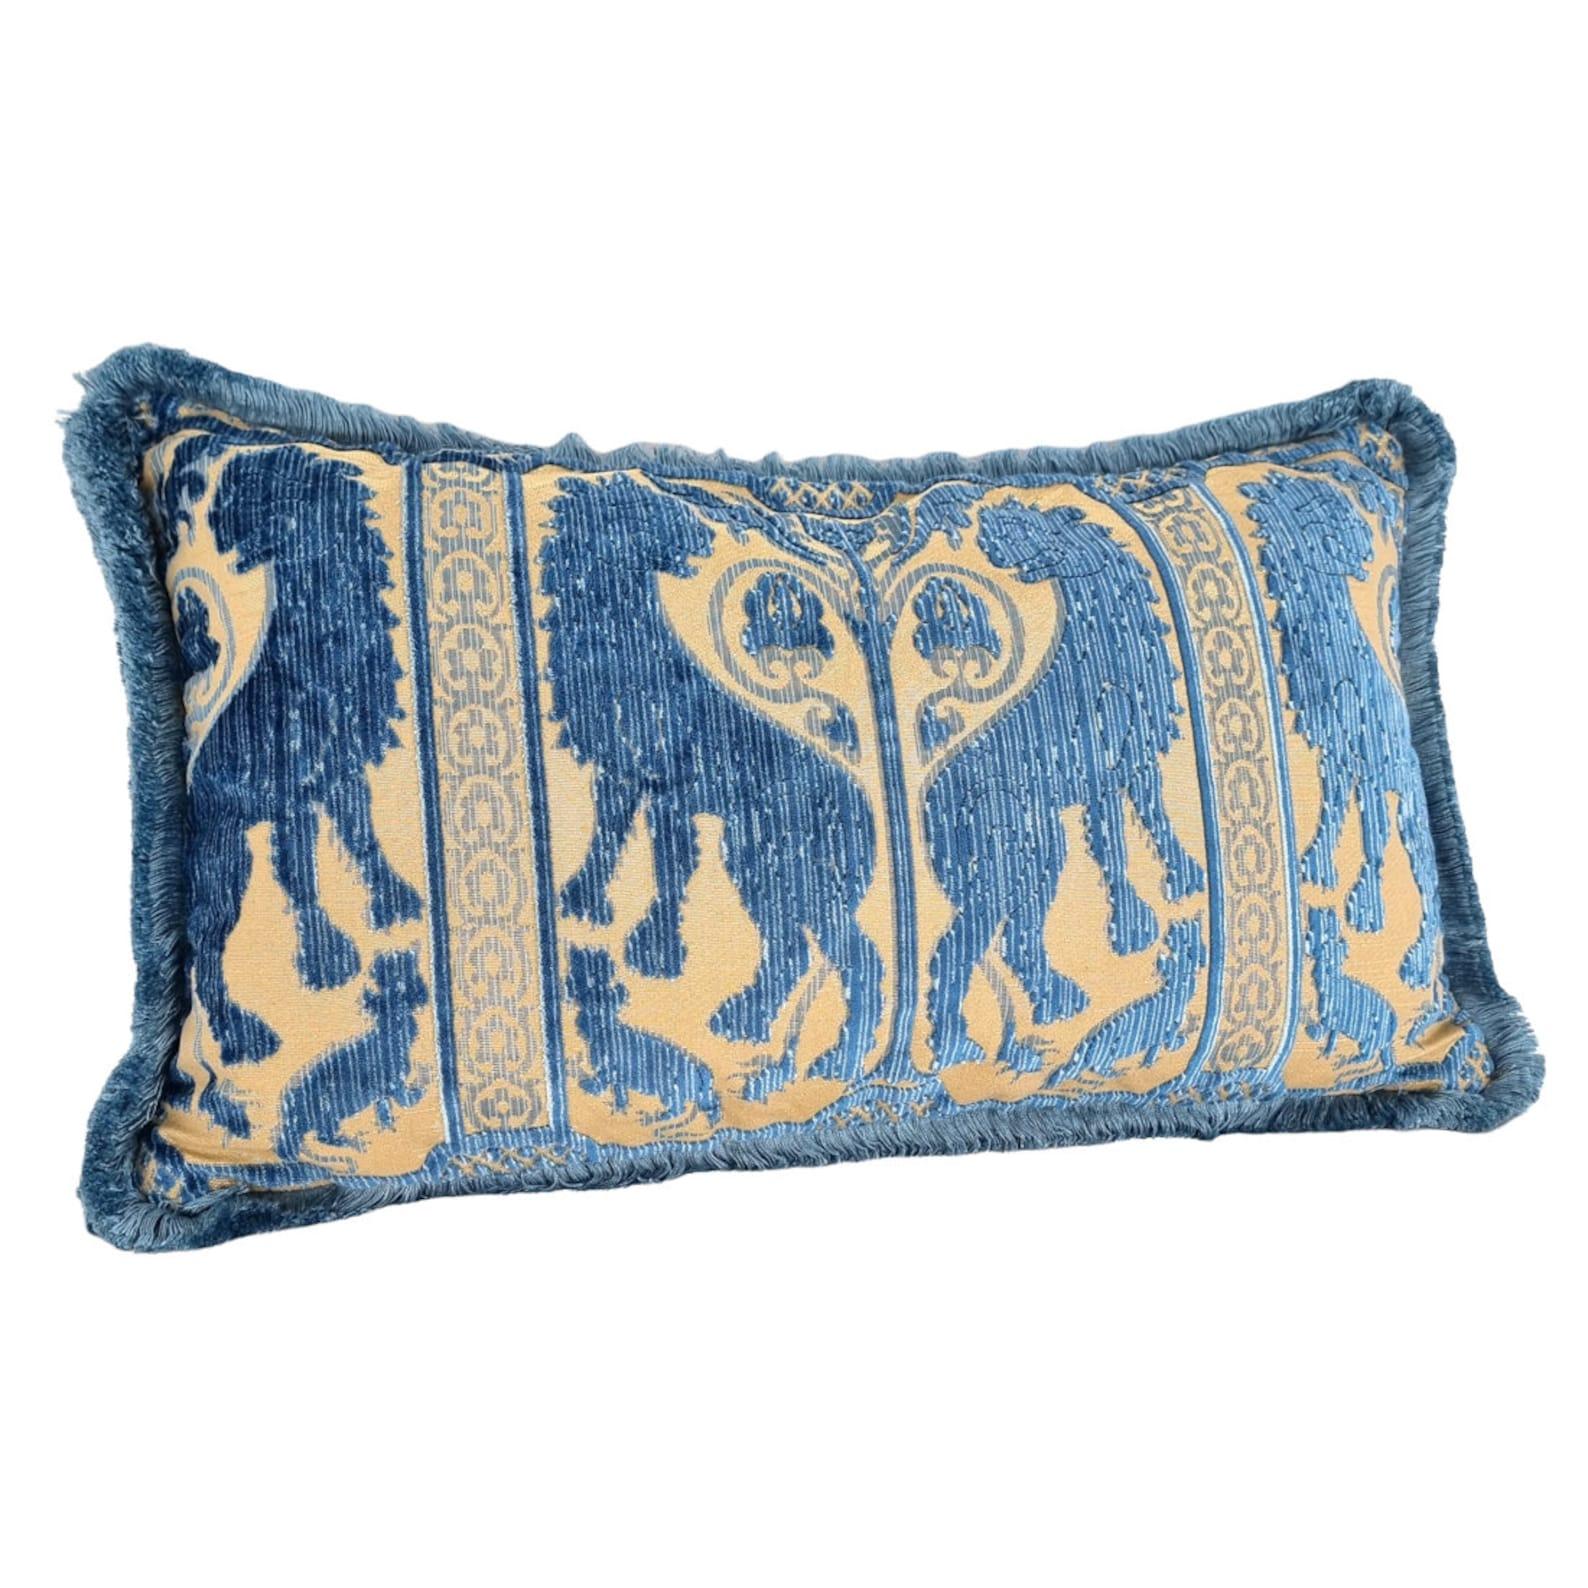 This amazing lumbar pillow is handmade using the iconic Leoni Bizantini - XII-XIV century design - silk heddle velvet in indigo blue color from 